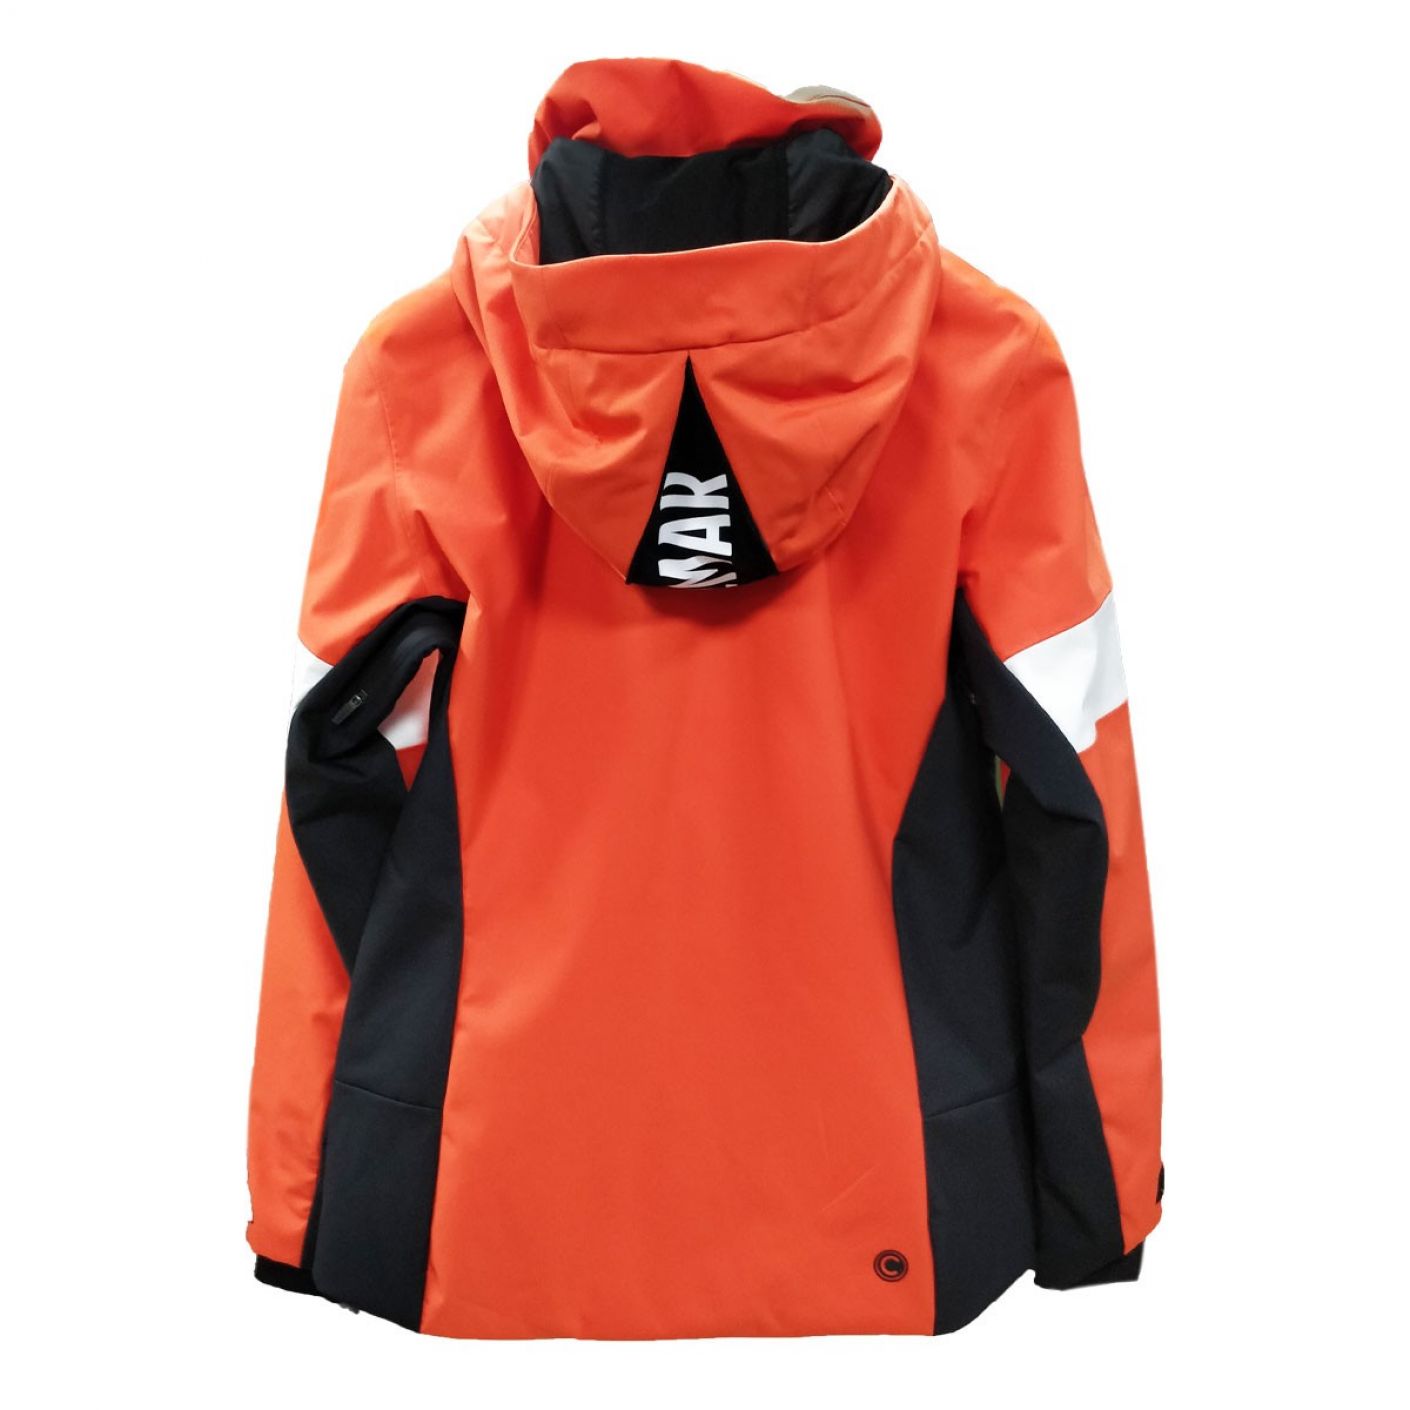 Colmar Iceland Women's Orange Ski Jacket